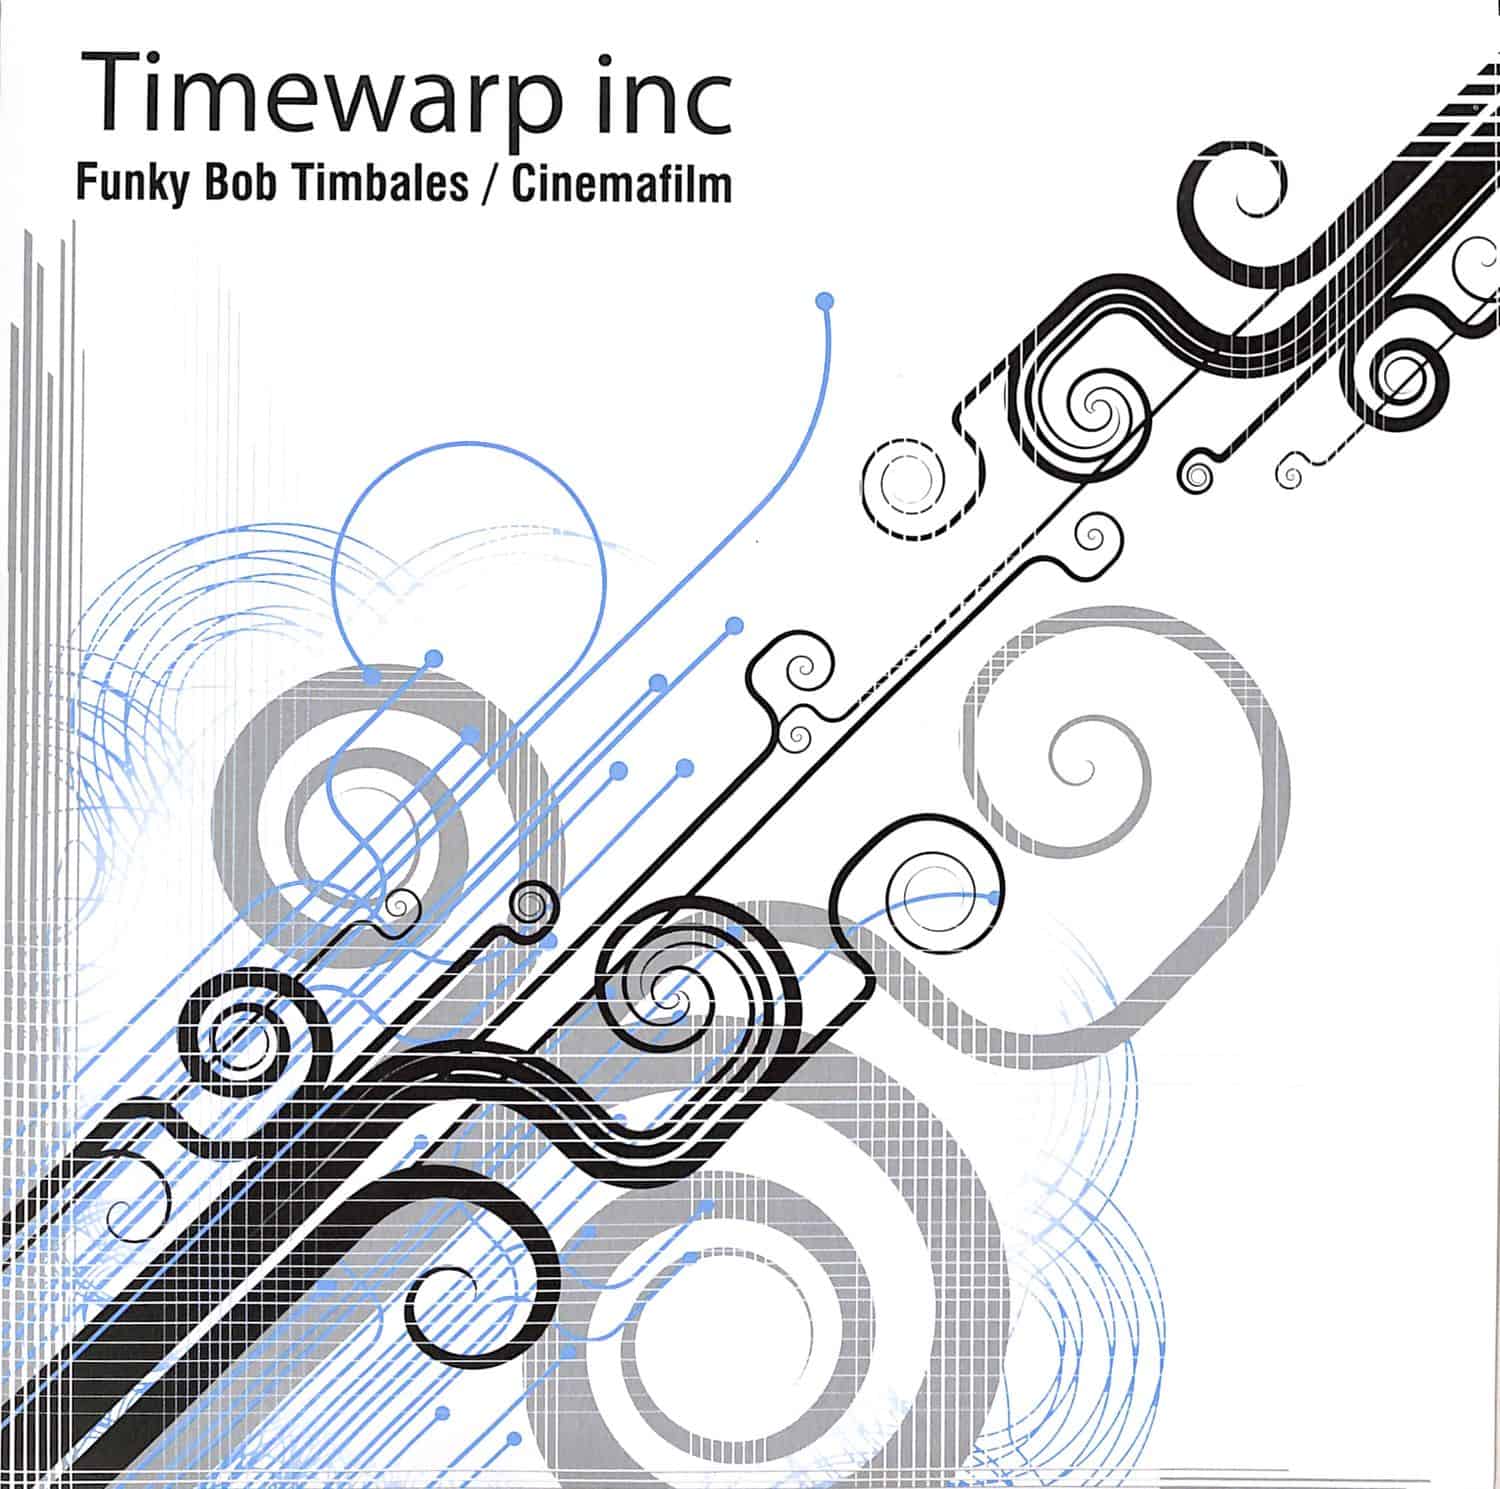 Timewarp inc - FUNKY BOB TIMBALES / CINEMAFILM 